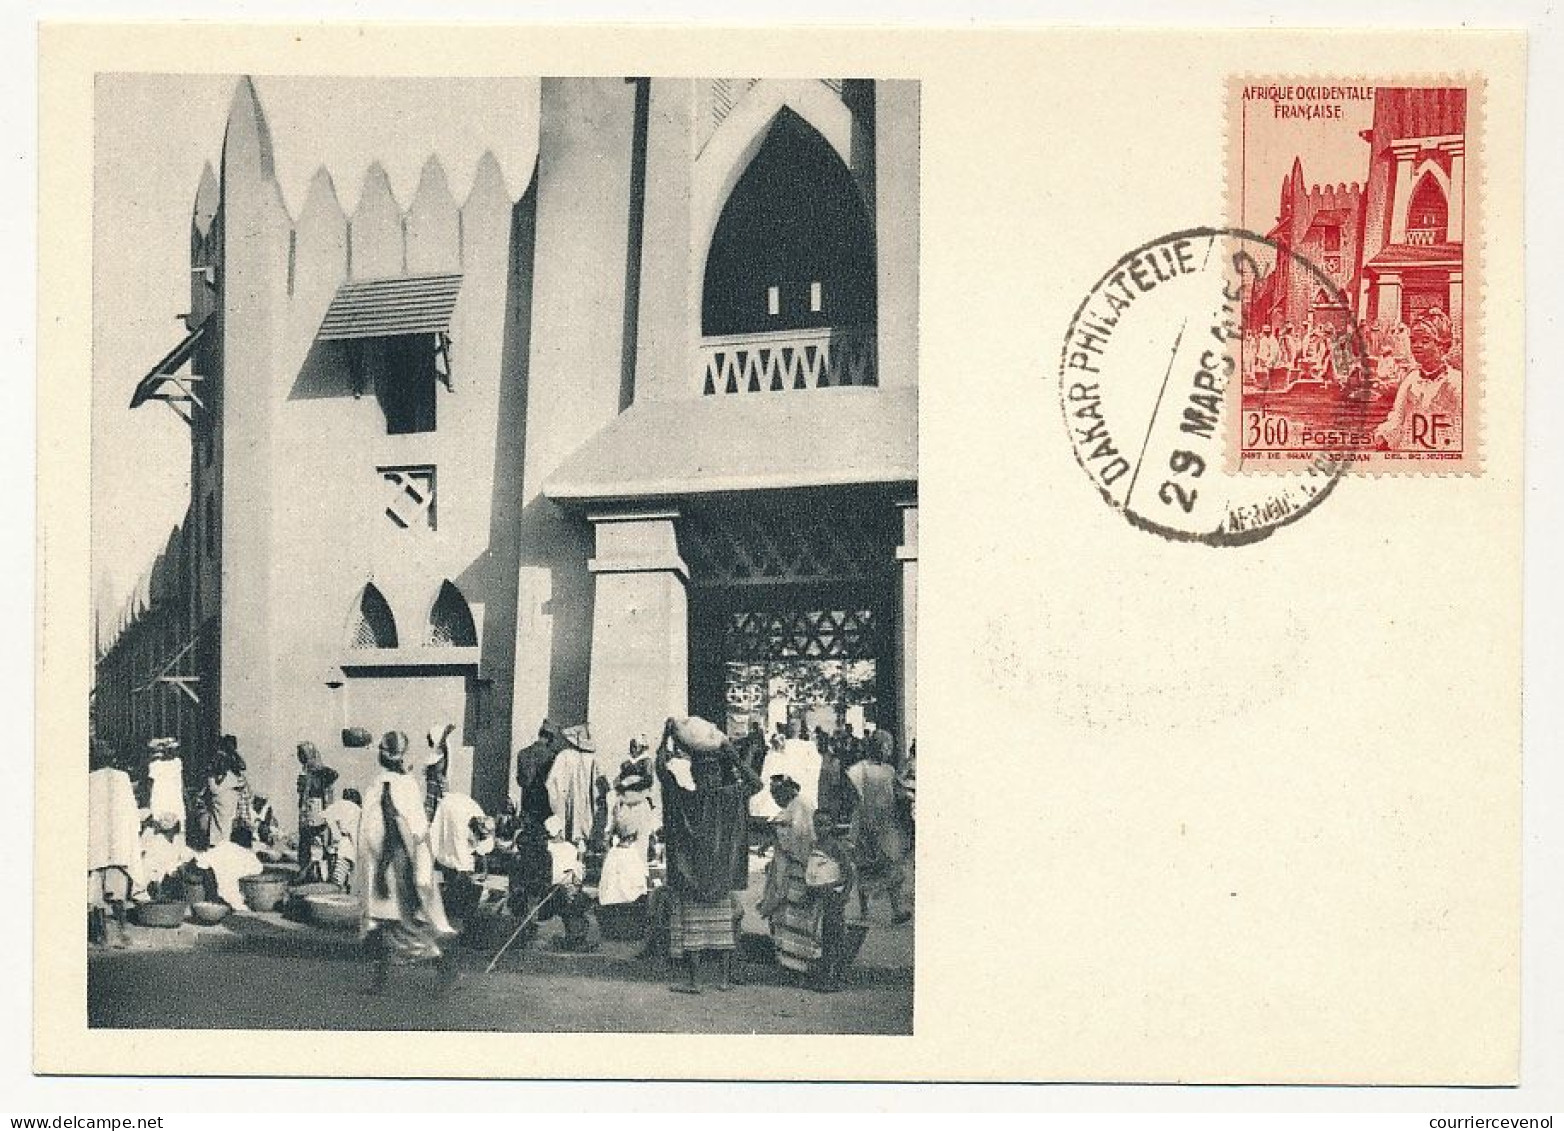 AOF => Carte Maximum Publicitaire IONYL - Soudan Français - Le Marché De Bamako - (DAKAR) 1952 - Storia Postale